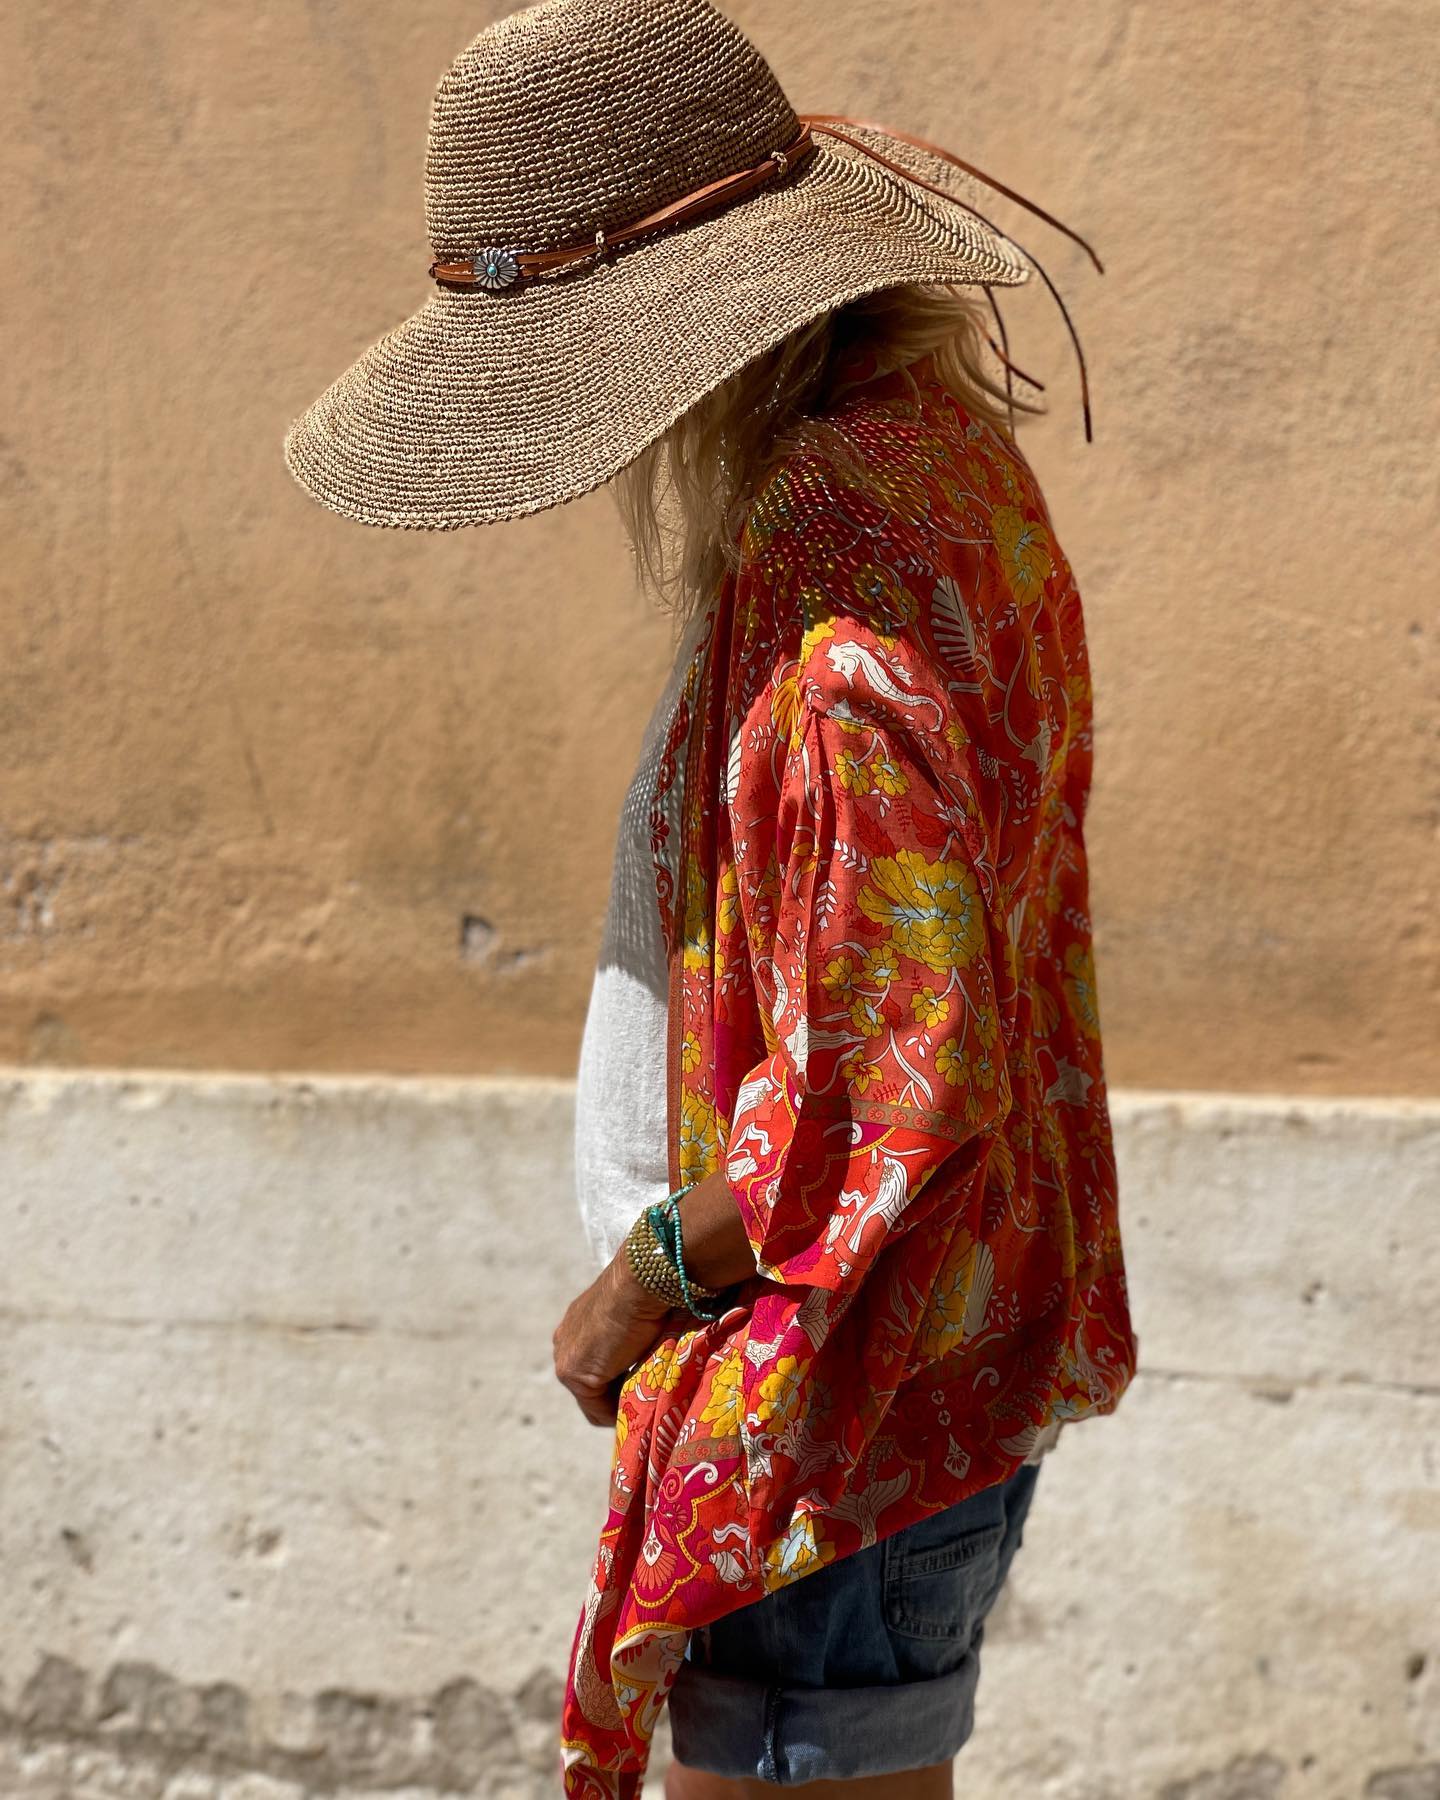 Kimono 👘 @sandcoachella 
Le seul et l’unique !!!

#mllelouiseaix#kimono#pretaporter#pretaporterfemme#summer#style#look#tendance